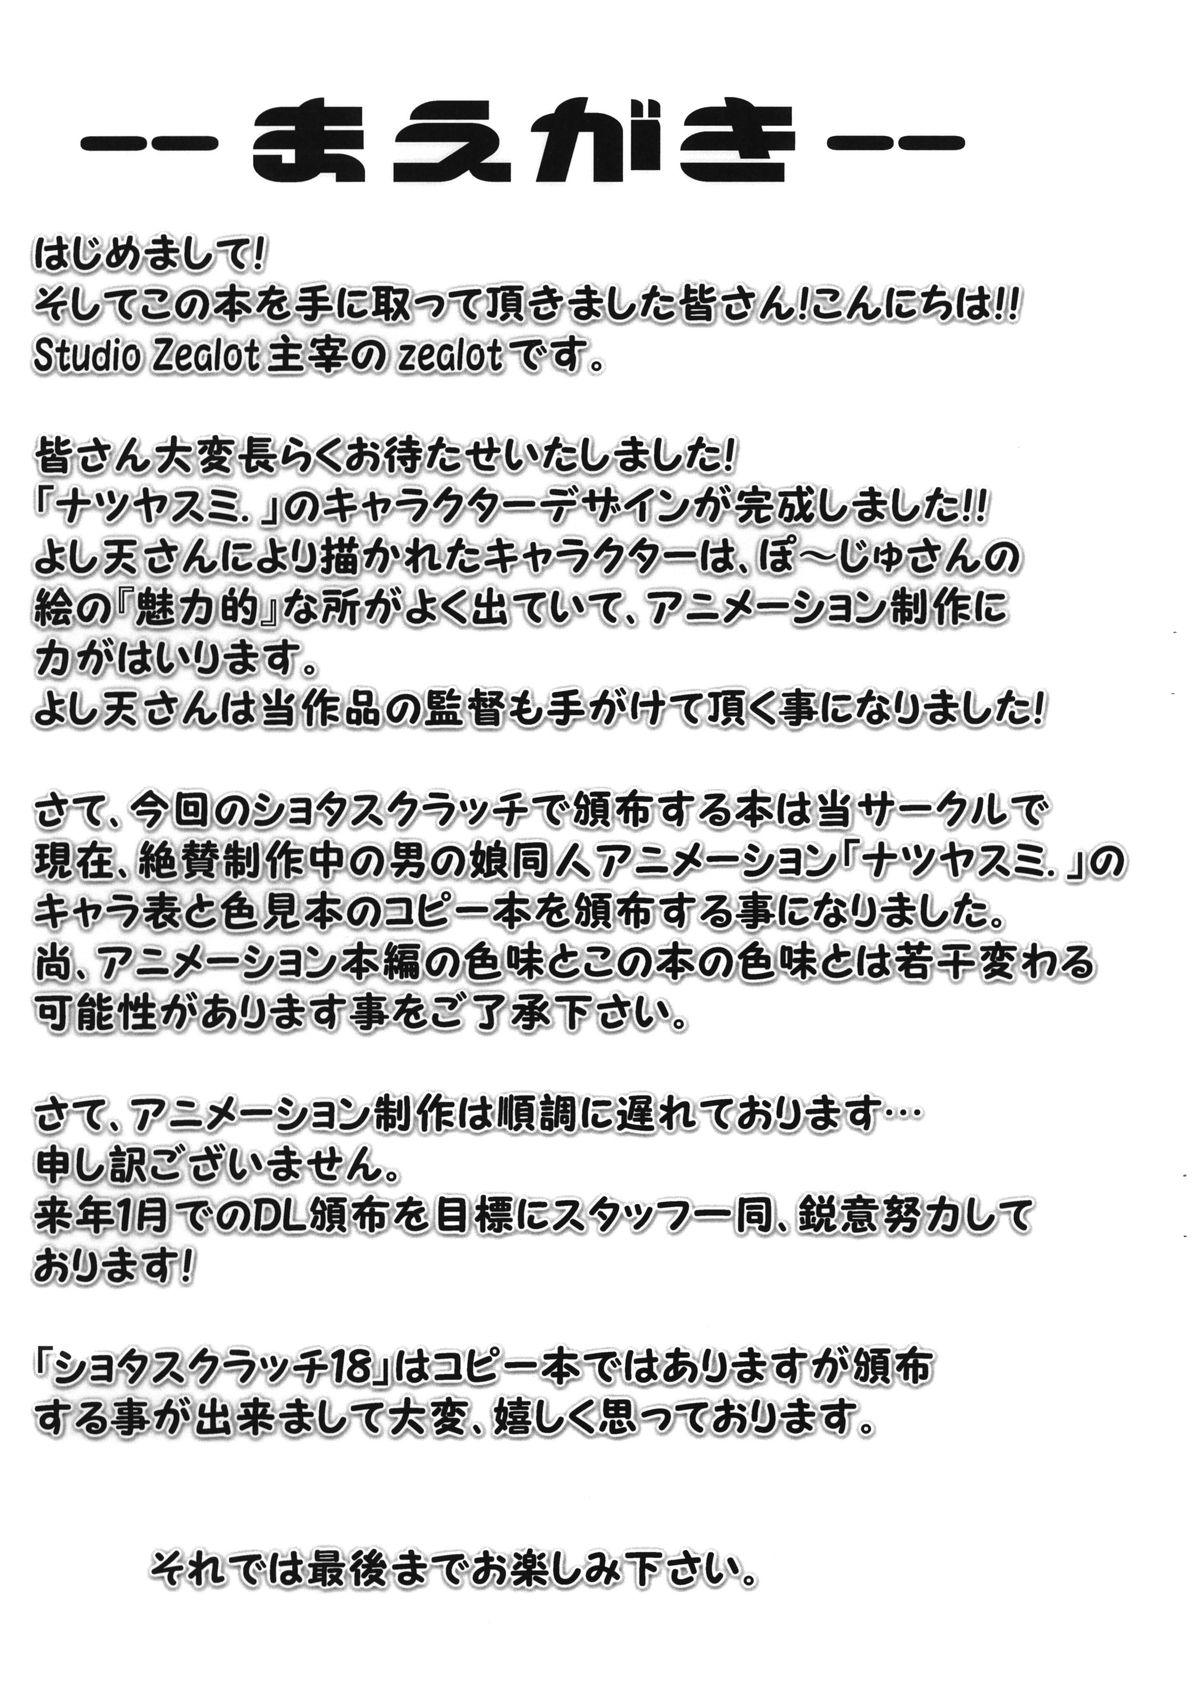 Natsuyasumi Period Chara De Shuu 5 May. 2012 Ver. 2